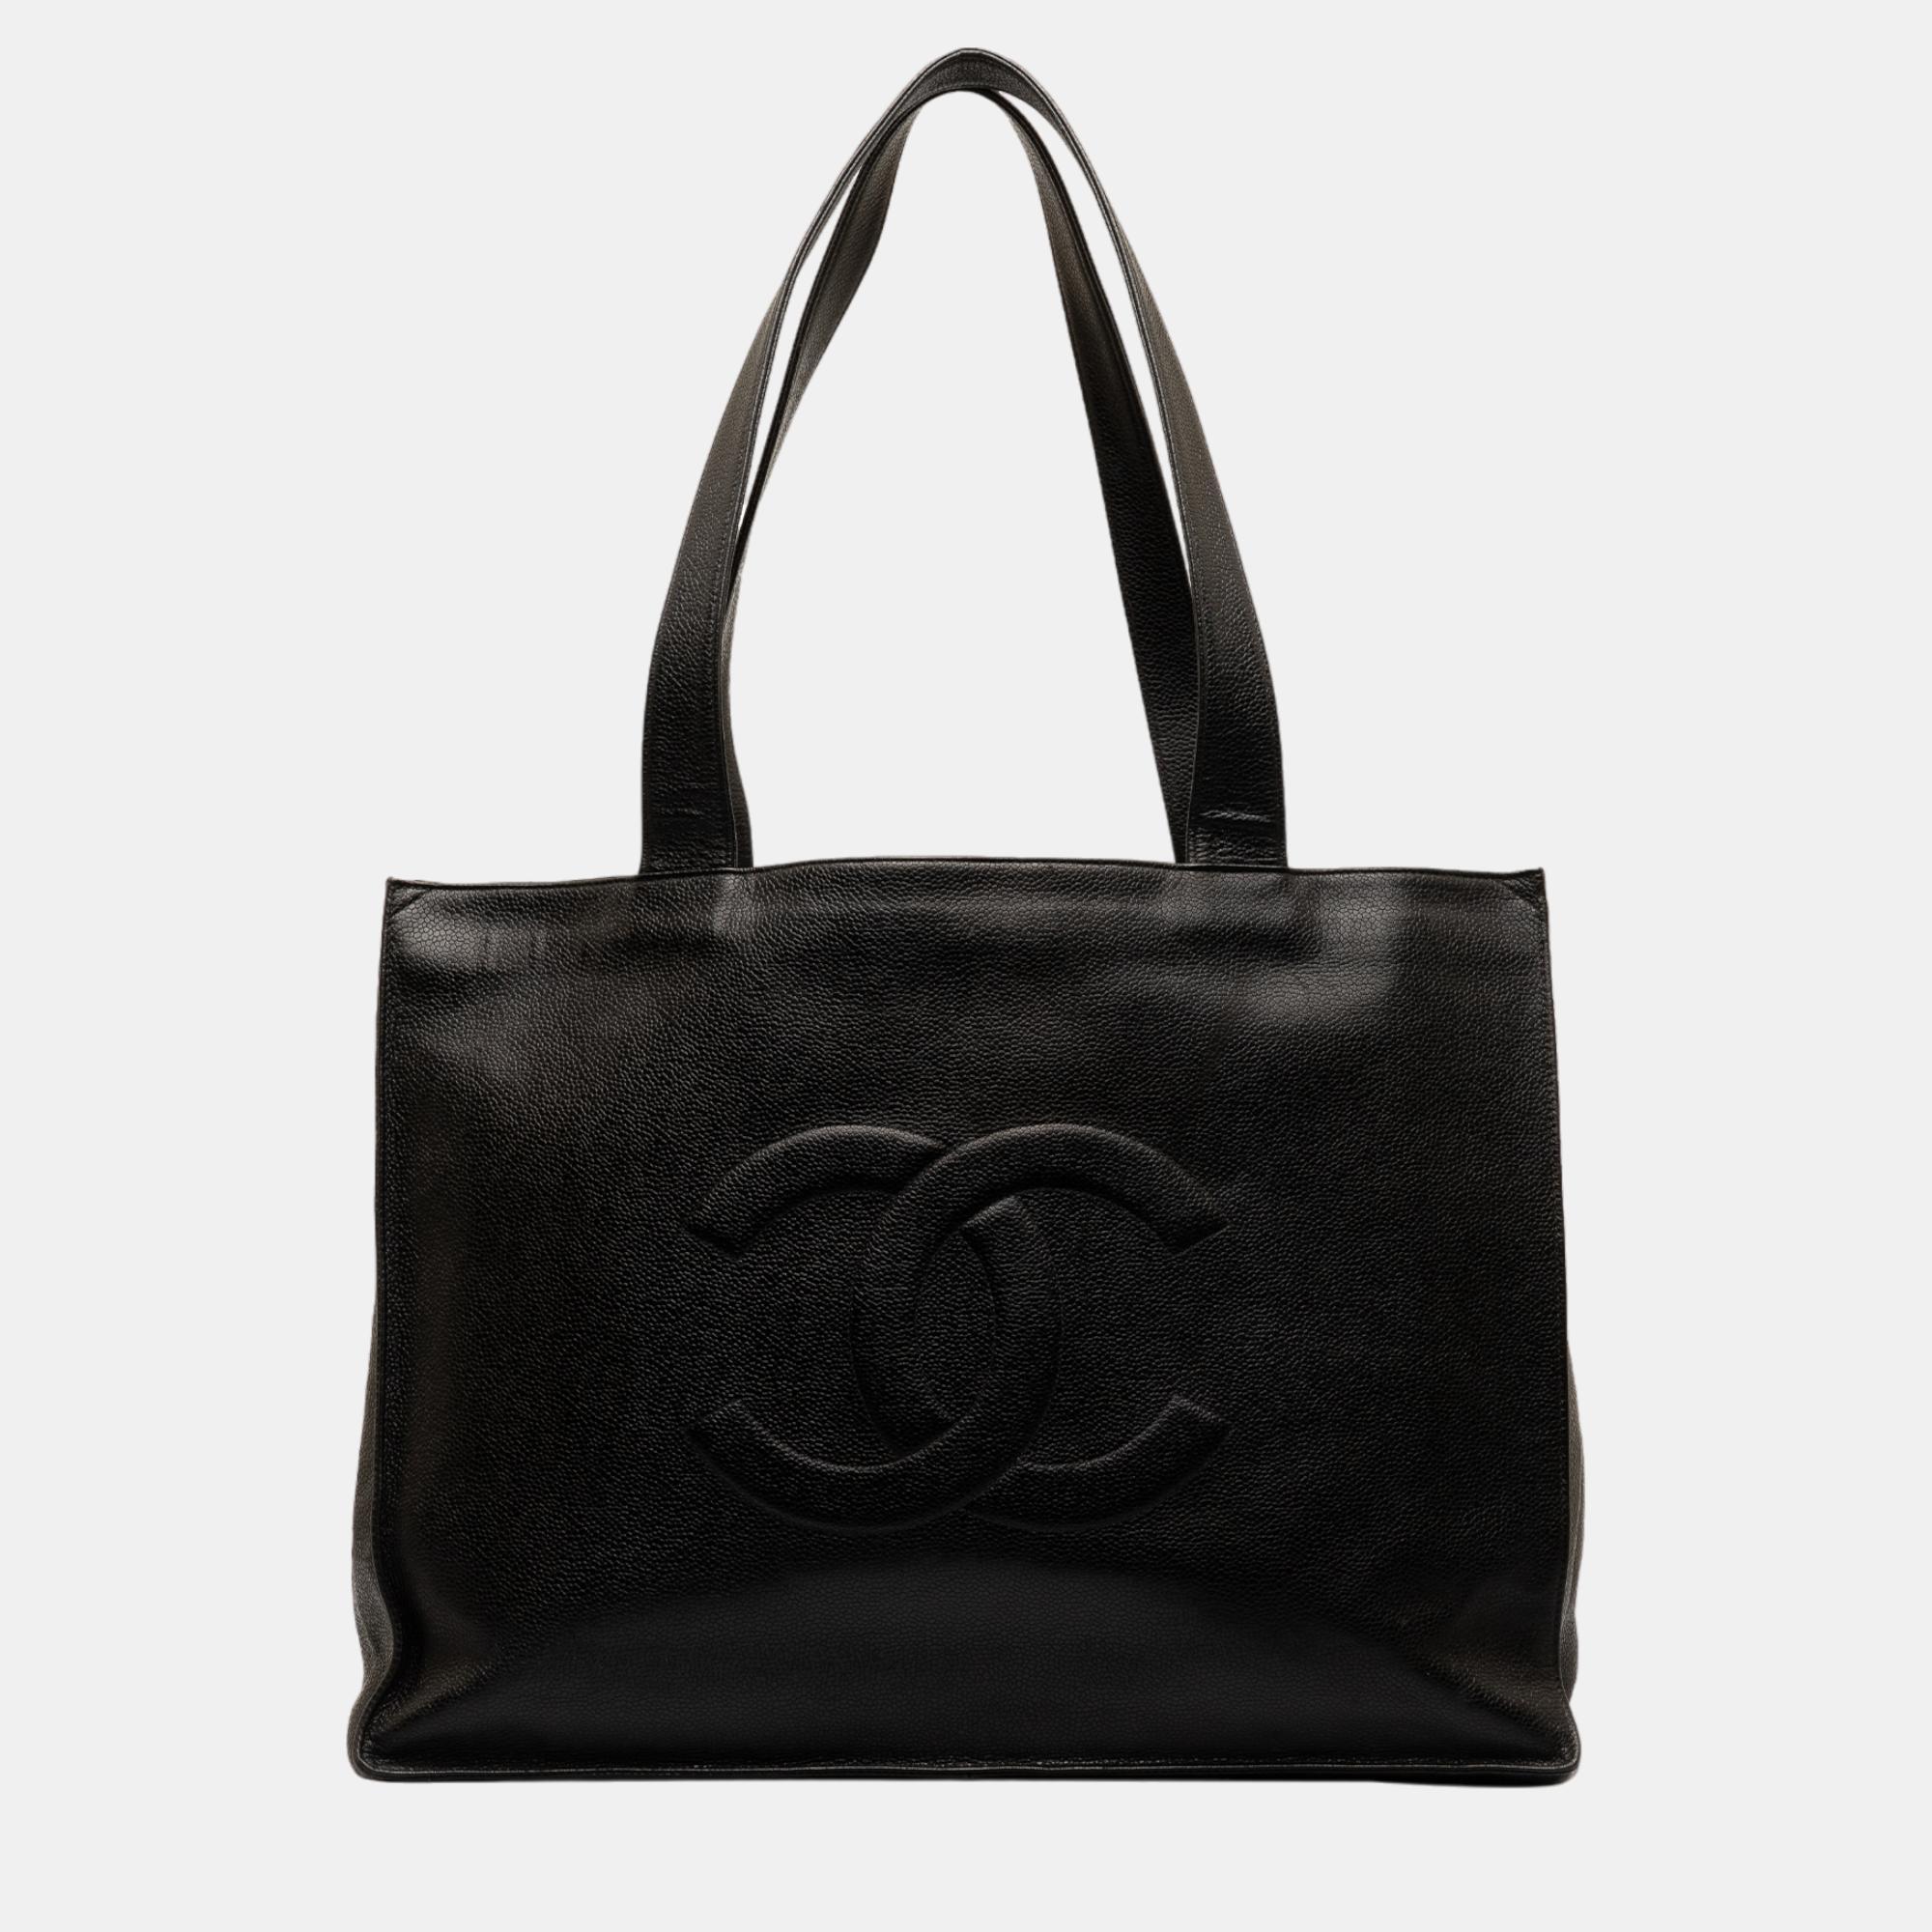 Chanel black caviar cc tote bag